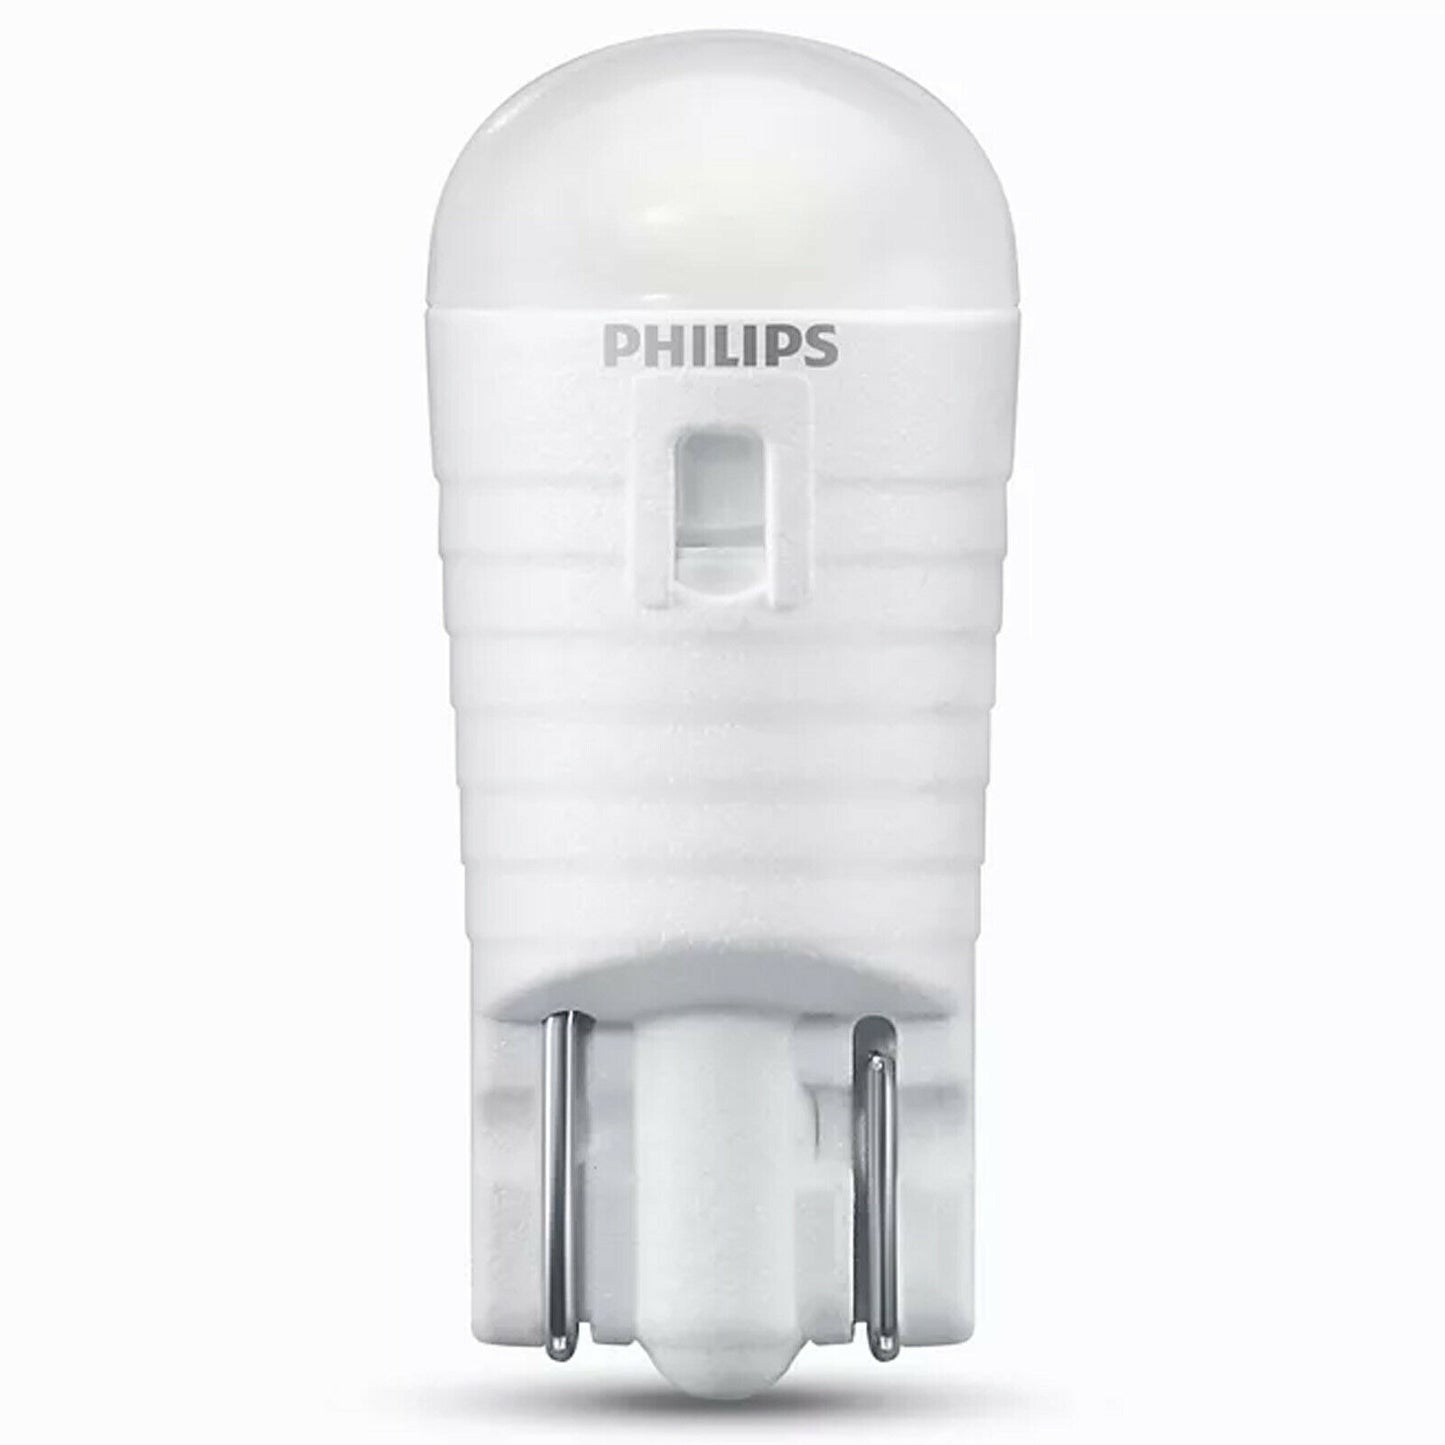 Philips Ultinon Pro3000 LED W5W 6000K Bright White Interior Car Bulbs (Twin) NEW